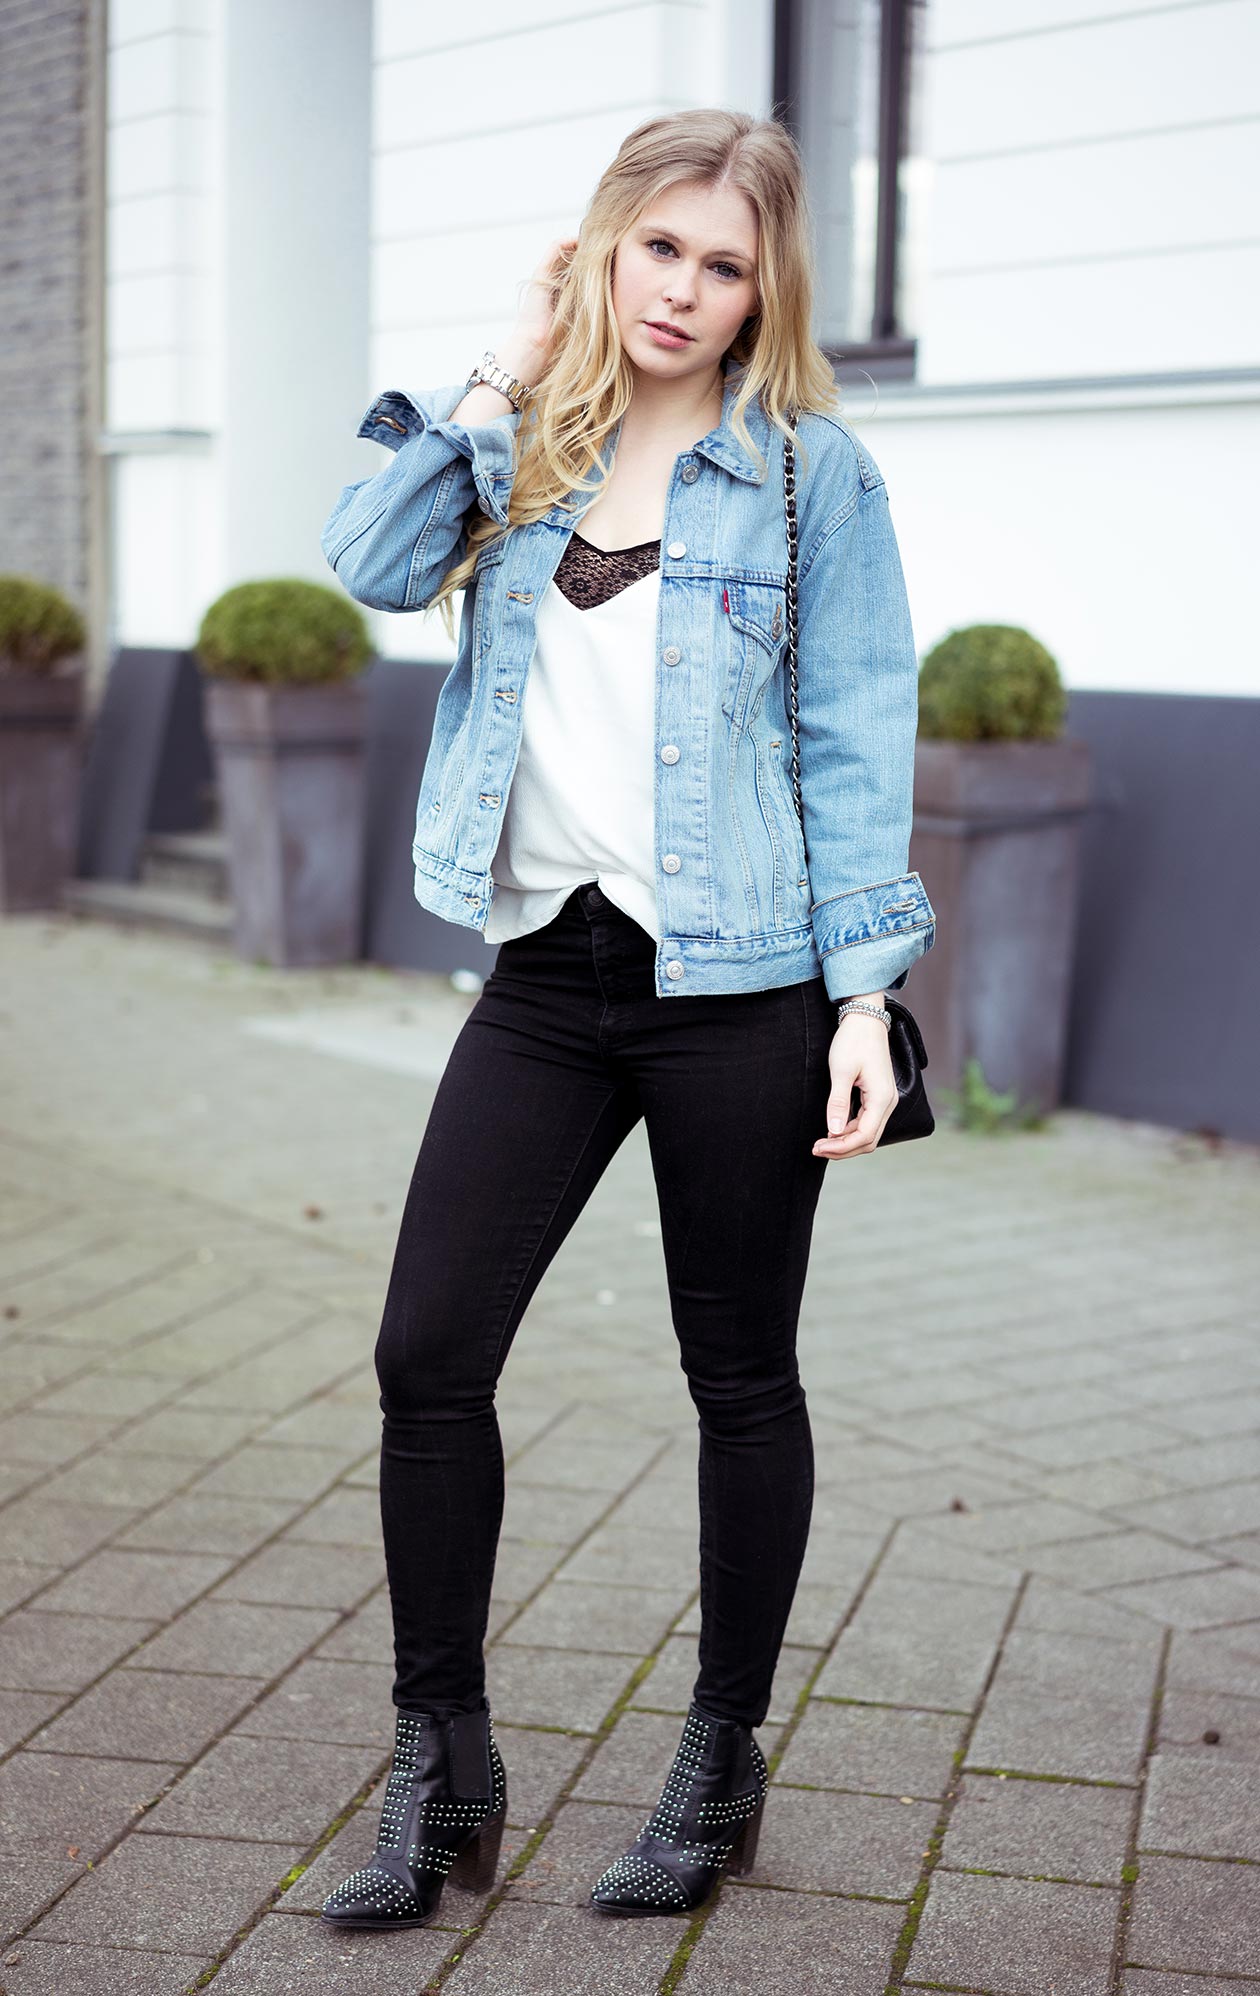 Oversize Jeansjacke Outfit Levis Blog Sunnyinga Modeblog